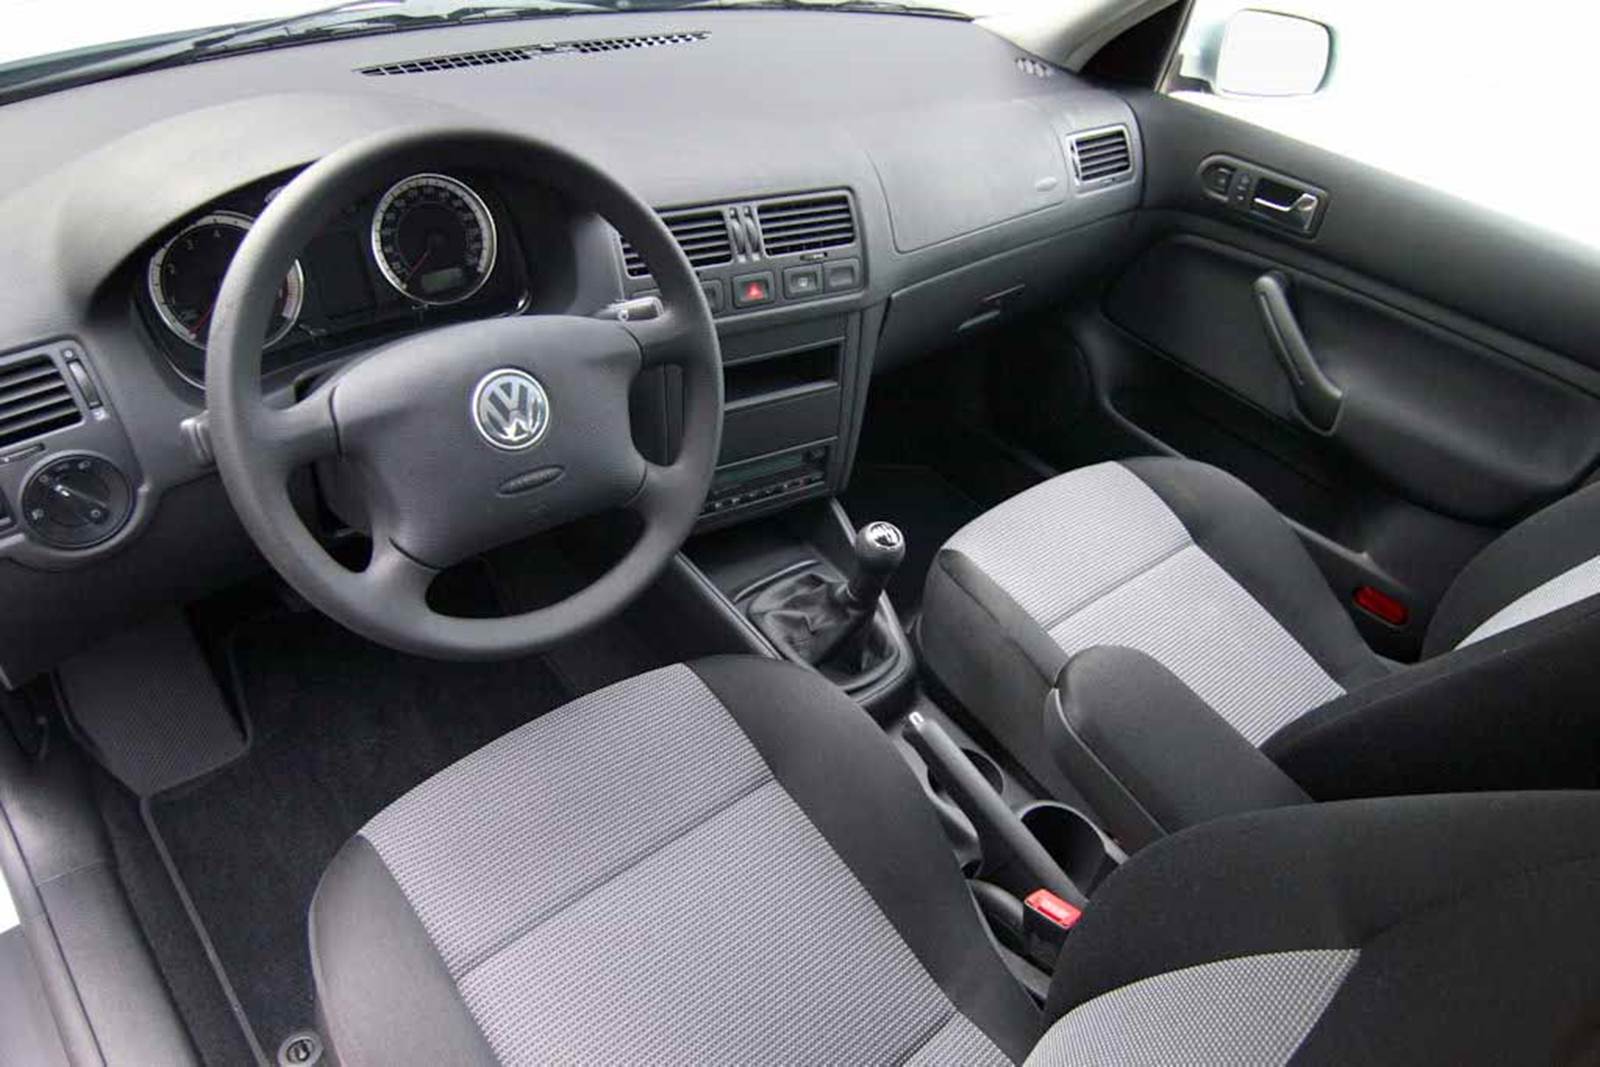 Volkswagen Bora 2006 - interior